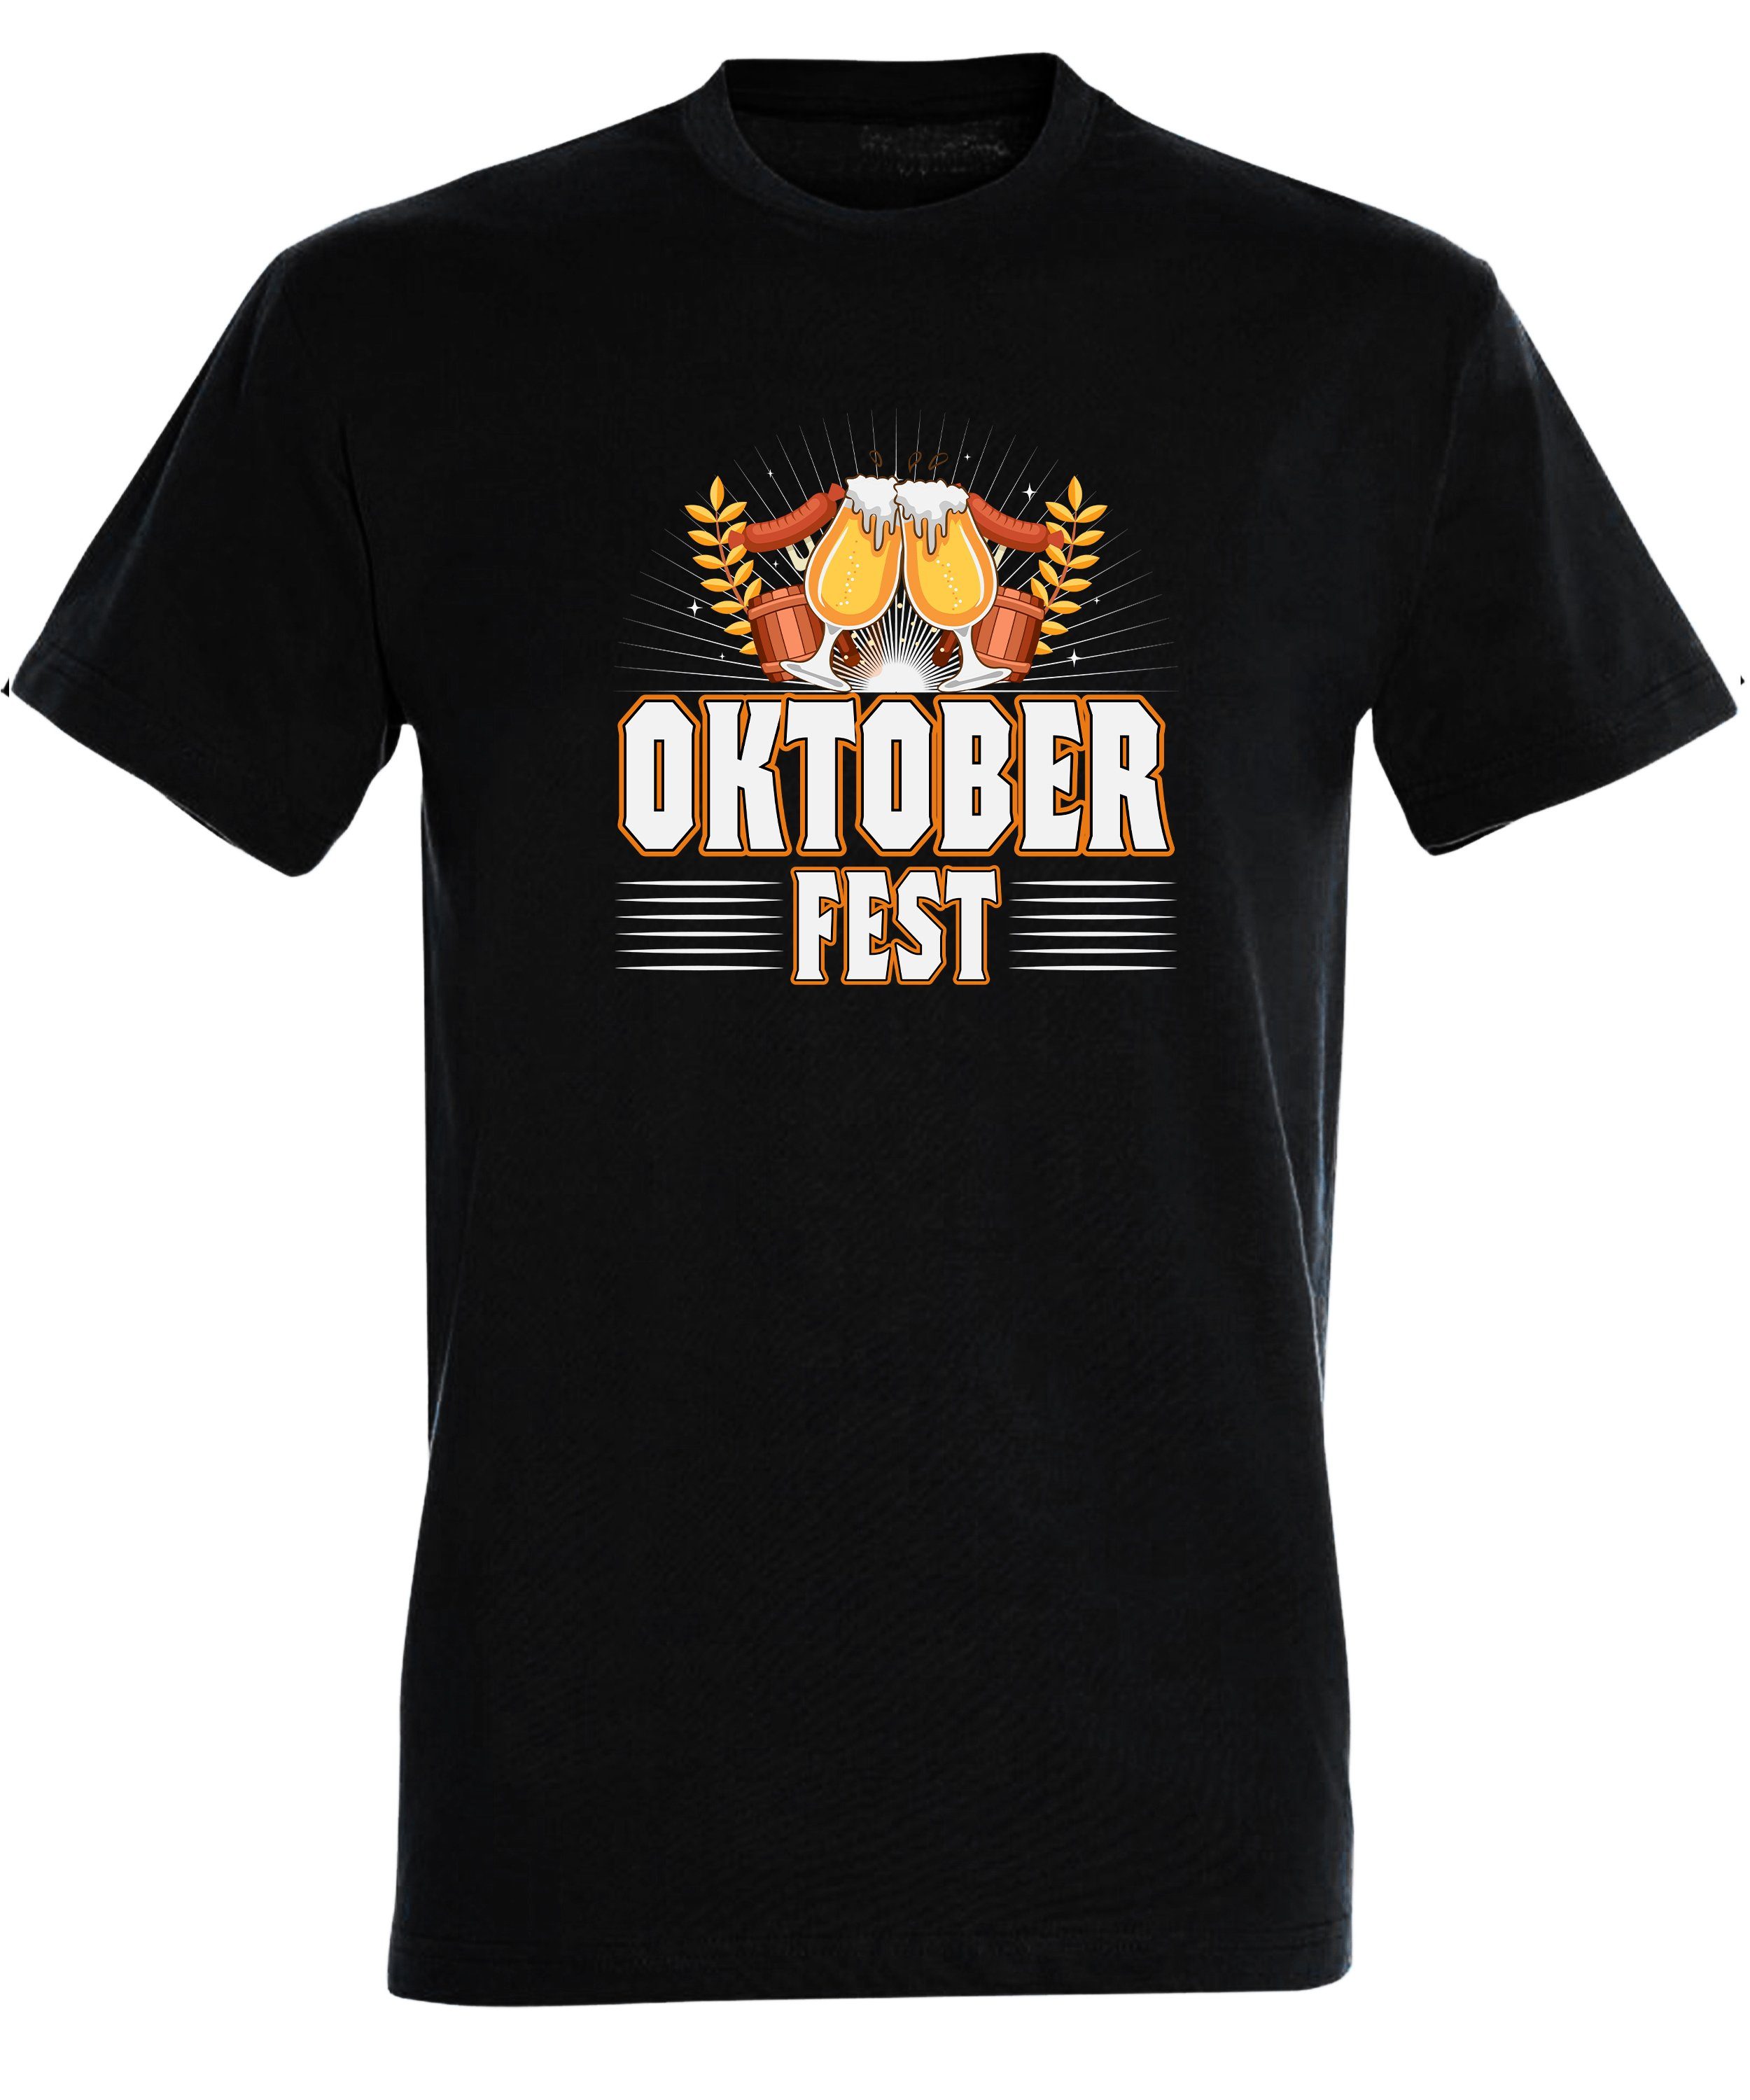 T-Shirt Regular schwarz Party Aufdruck mit Baumwollshirt MyDesign24 i327 Herren - Fit, Oktoberfest Shirt T-Shirt